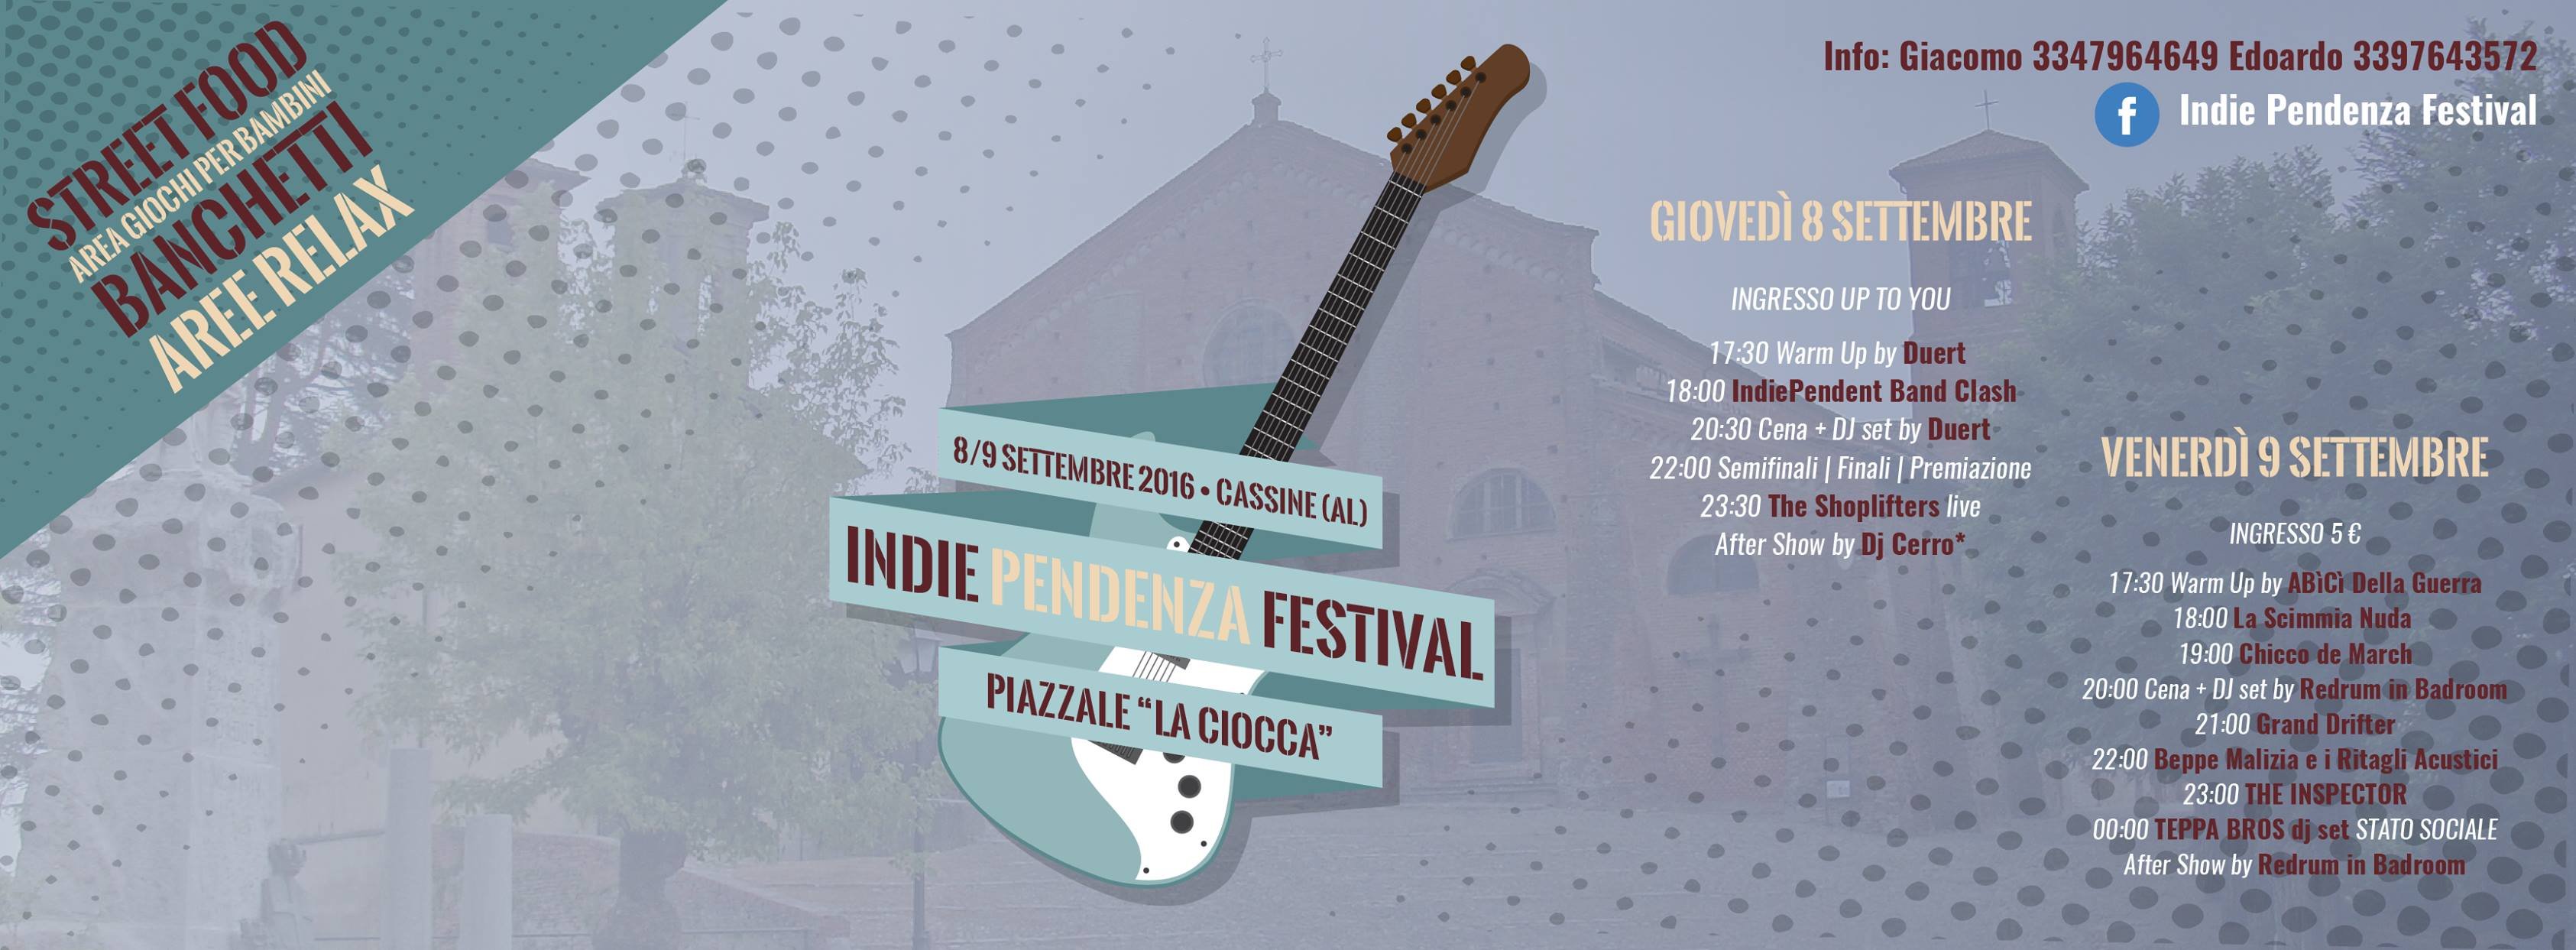 IndiePendenza Music, Art & Culture Festival